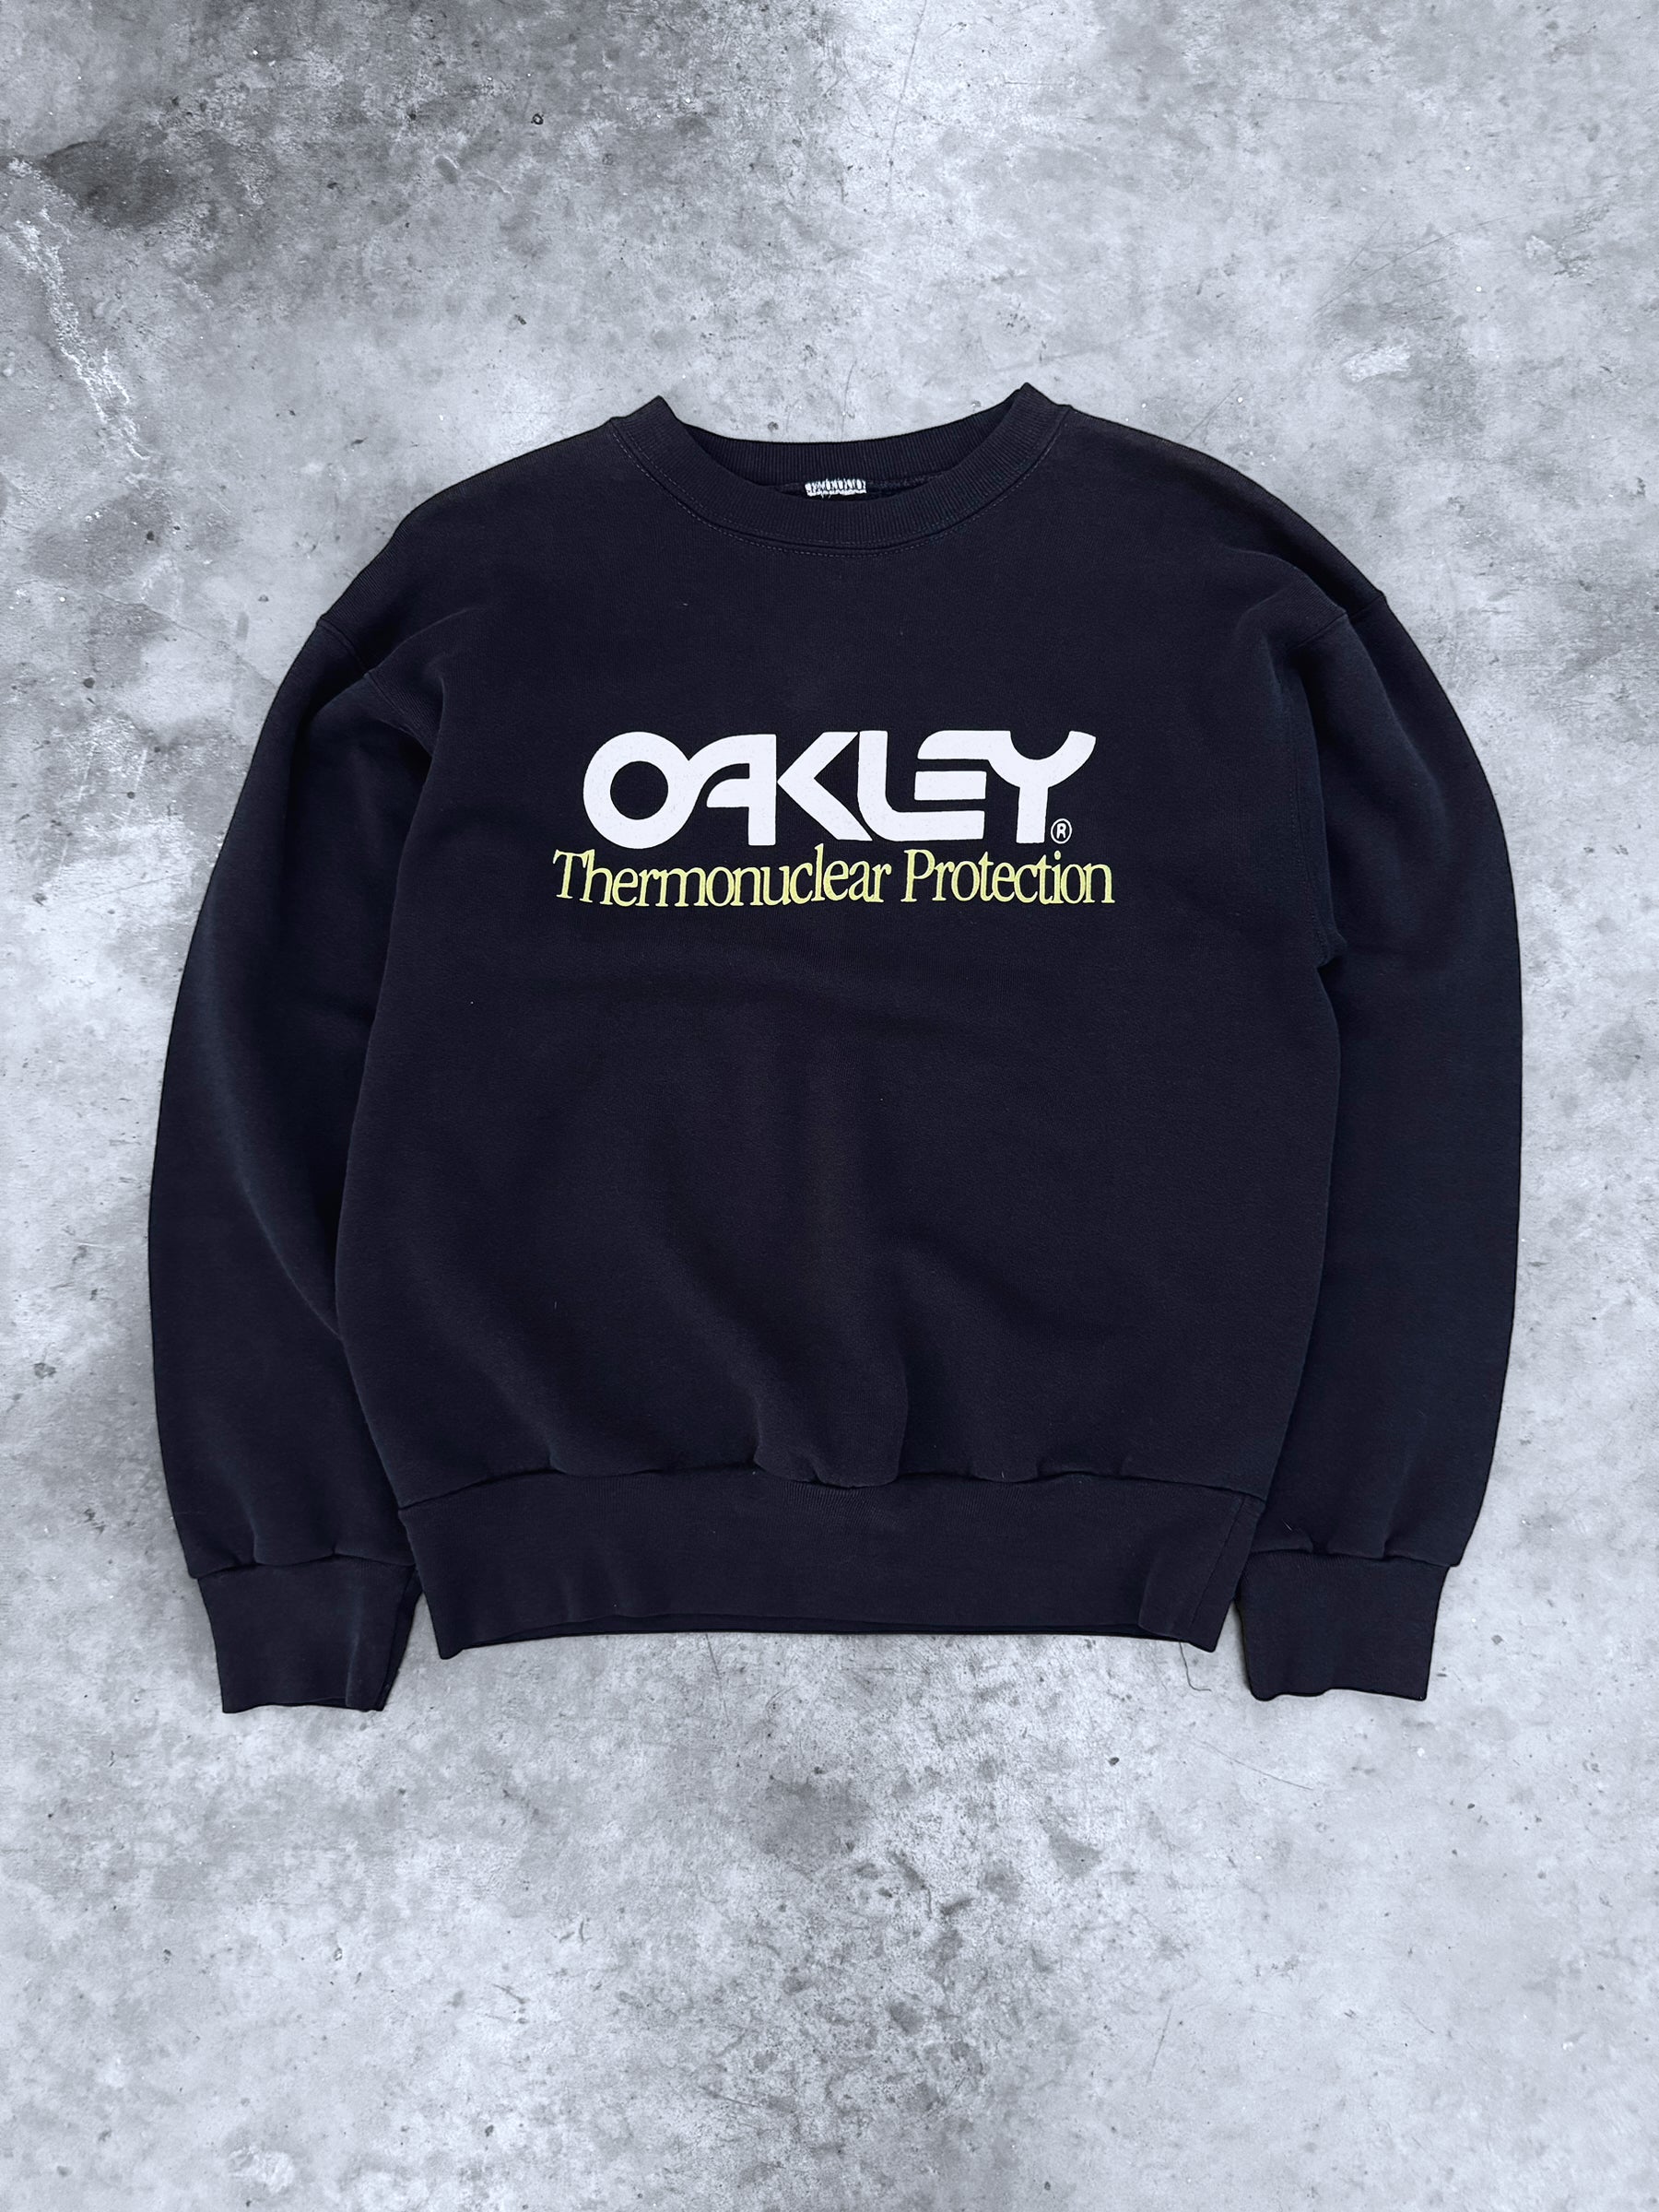 1990s Oakley Thermonuclear Protection Sweatshirt - GRAY ERA 